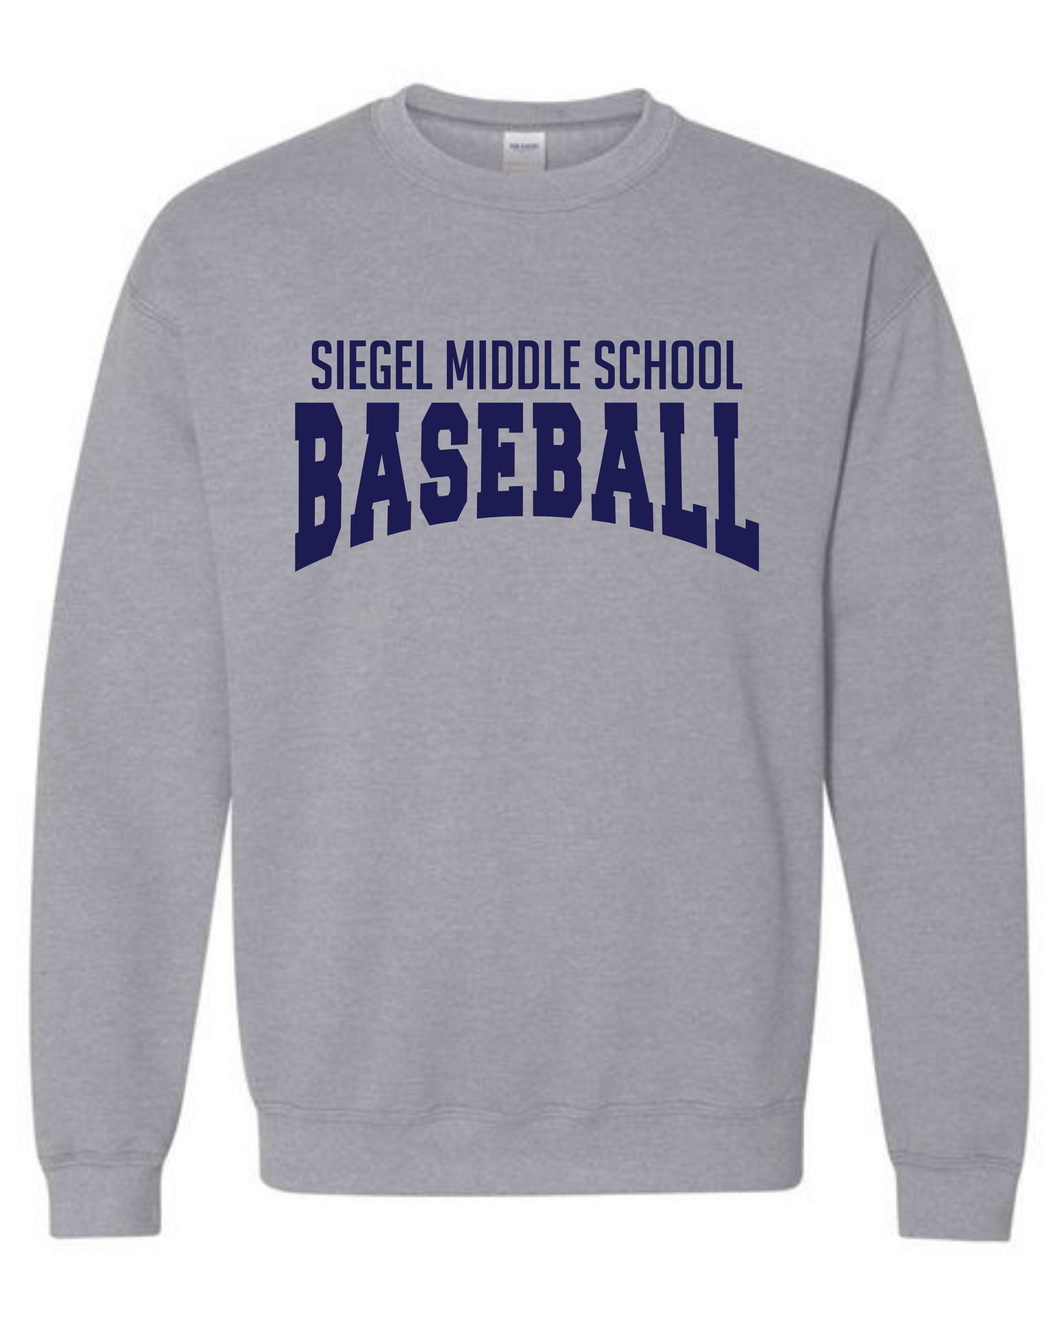 Siegel Middle School Baseball Sweatshirt